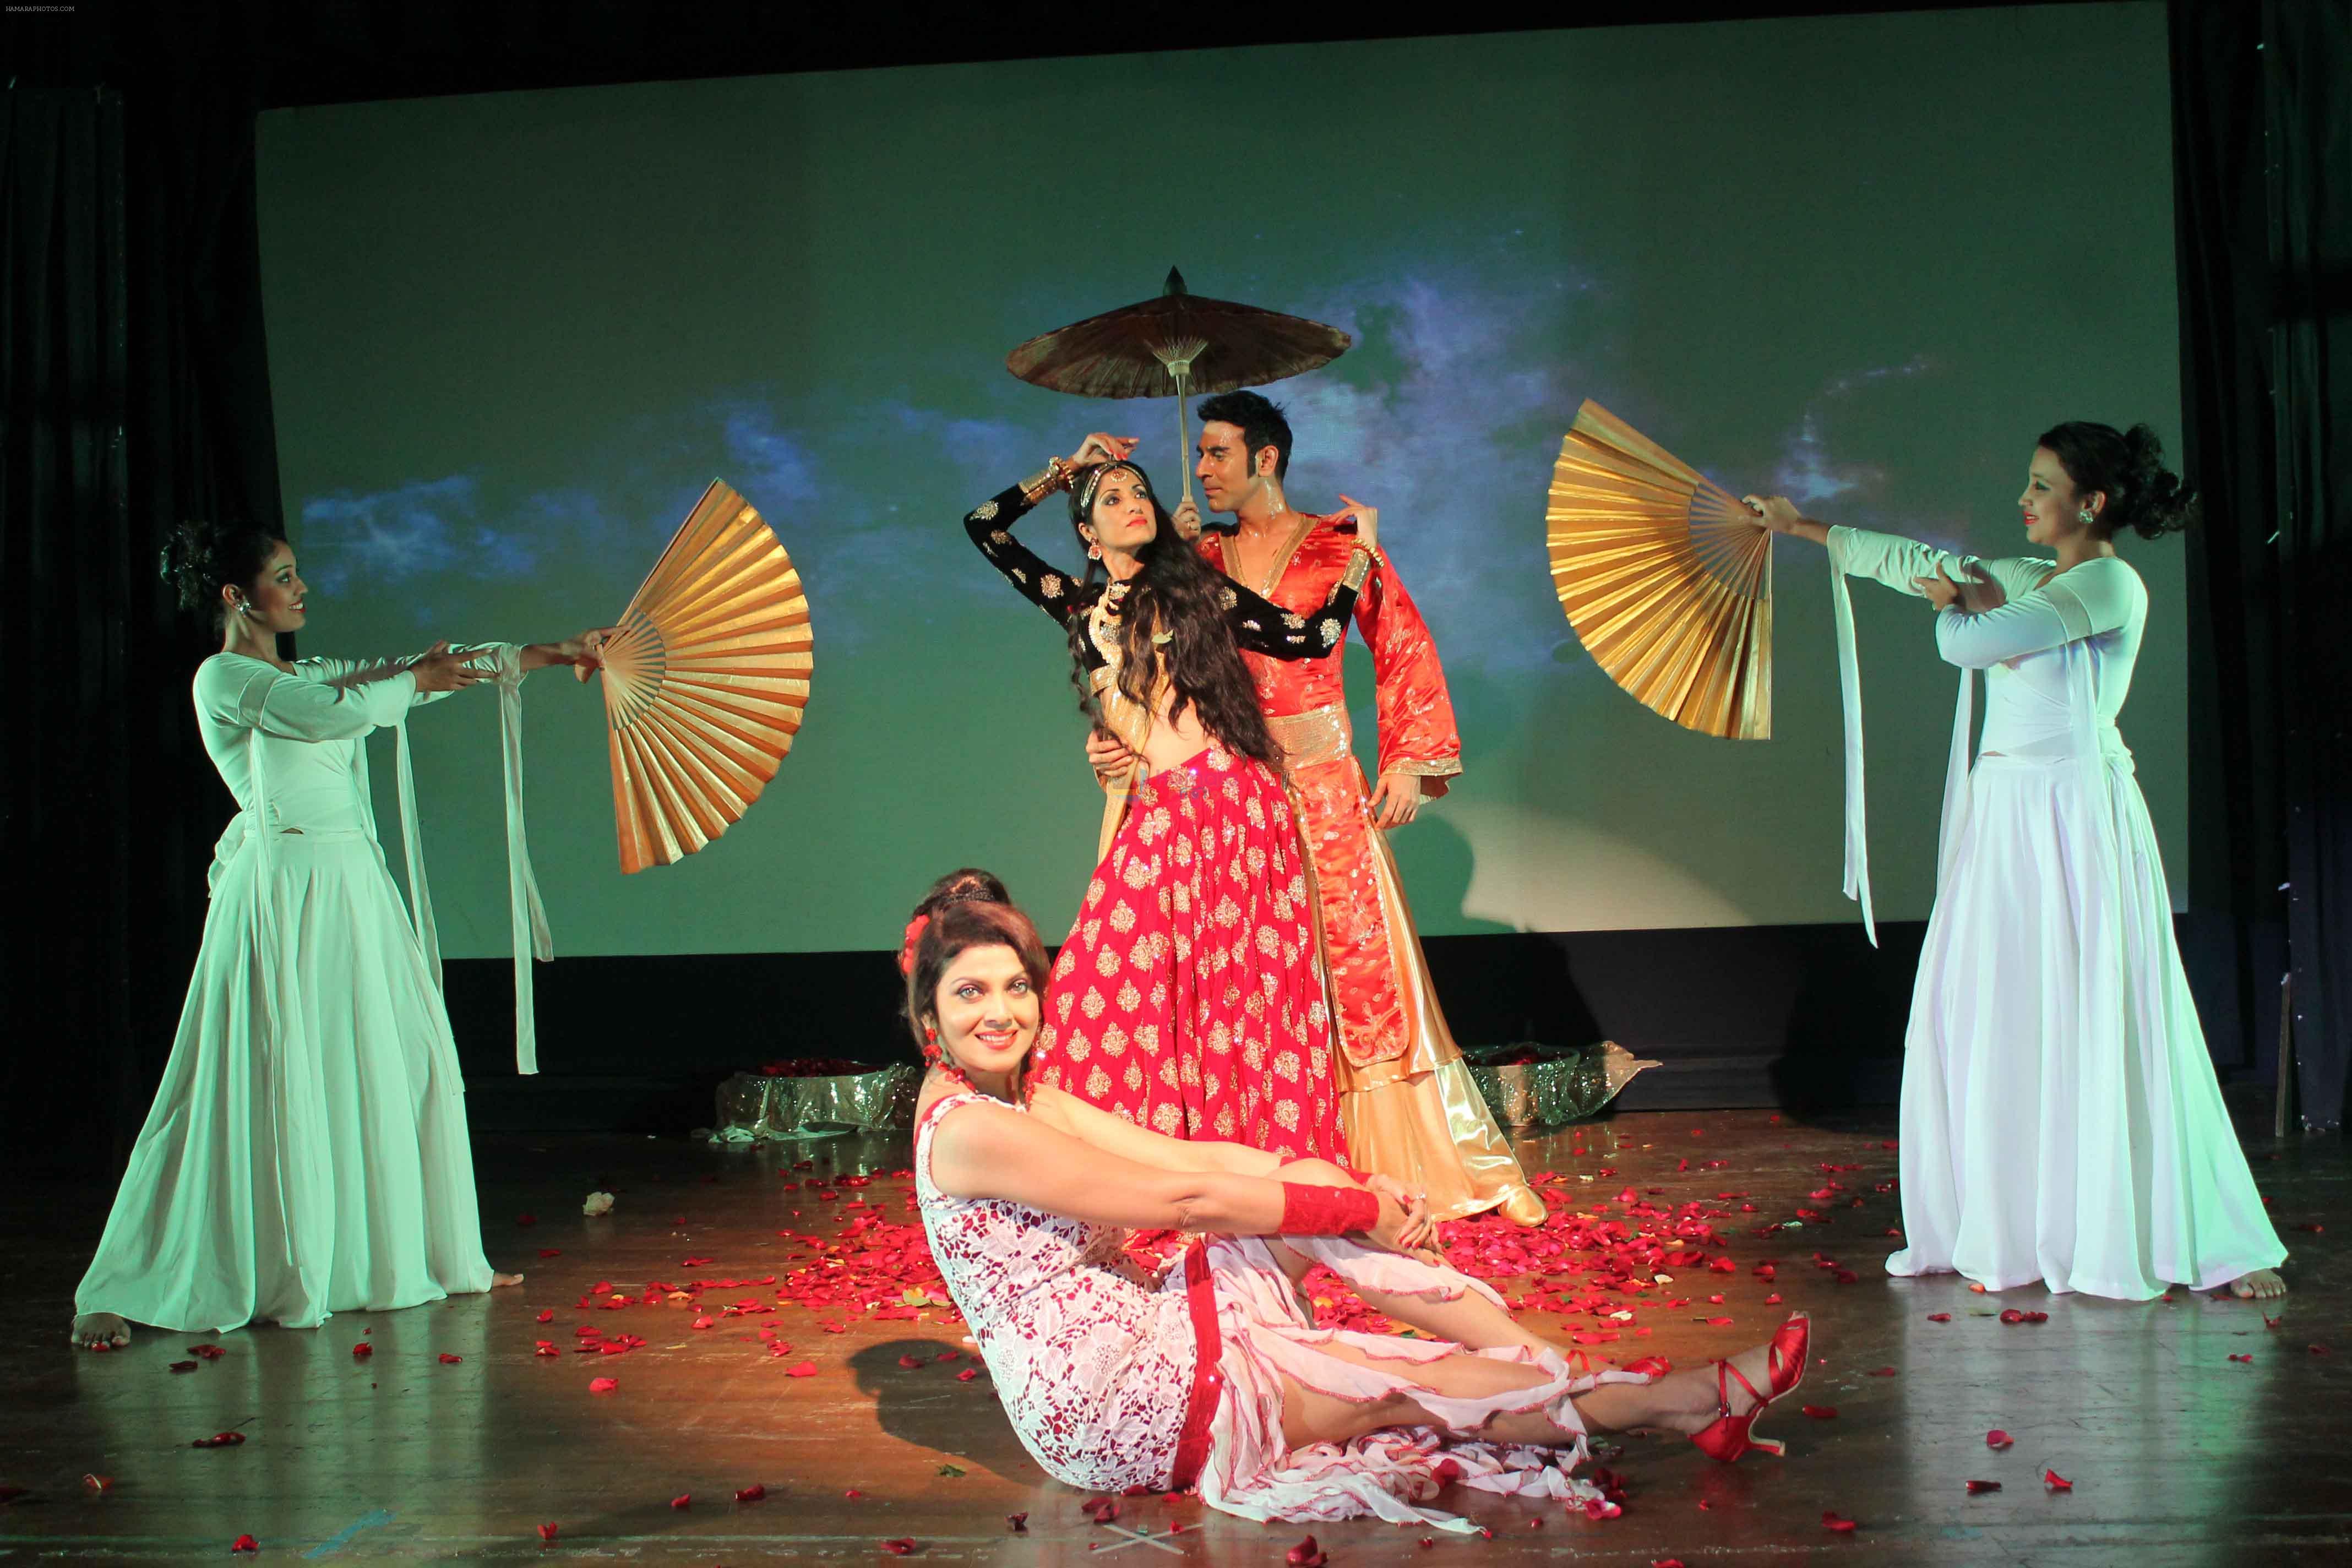 Sandip Soparrkar, jesse Randhawa and Varsha Usgaovkar at Indo Korean grand musical by Sandip Soparrkar based on 78 AD staged for Valentine's Day on 11th Feb 2015